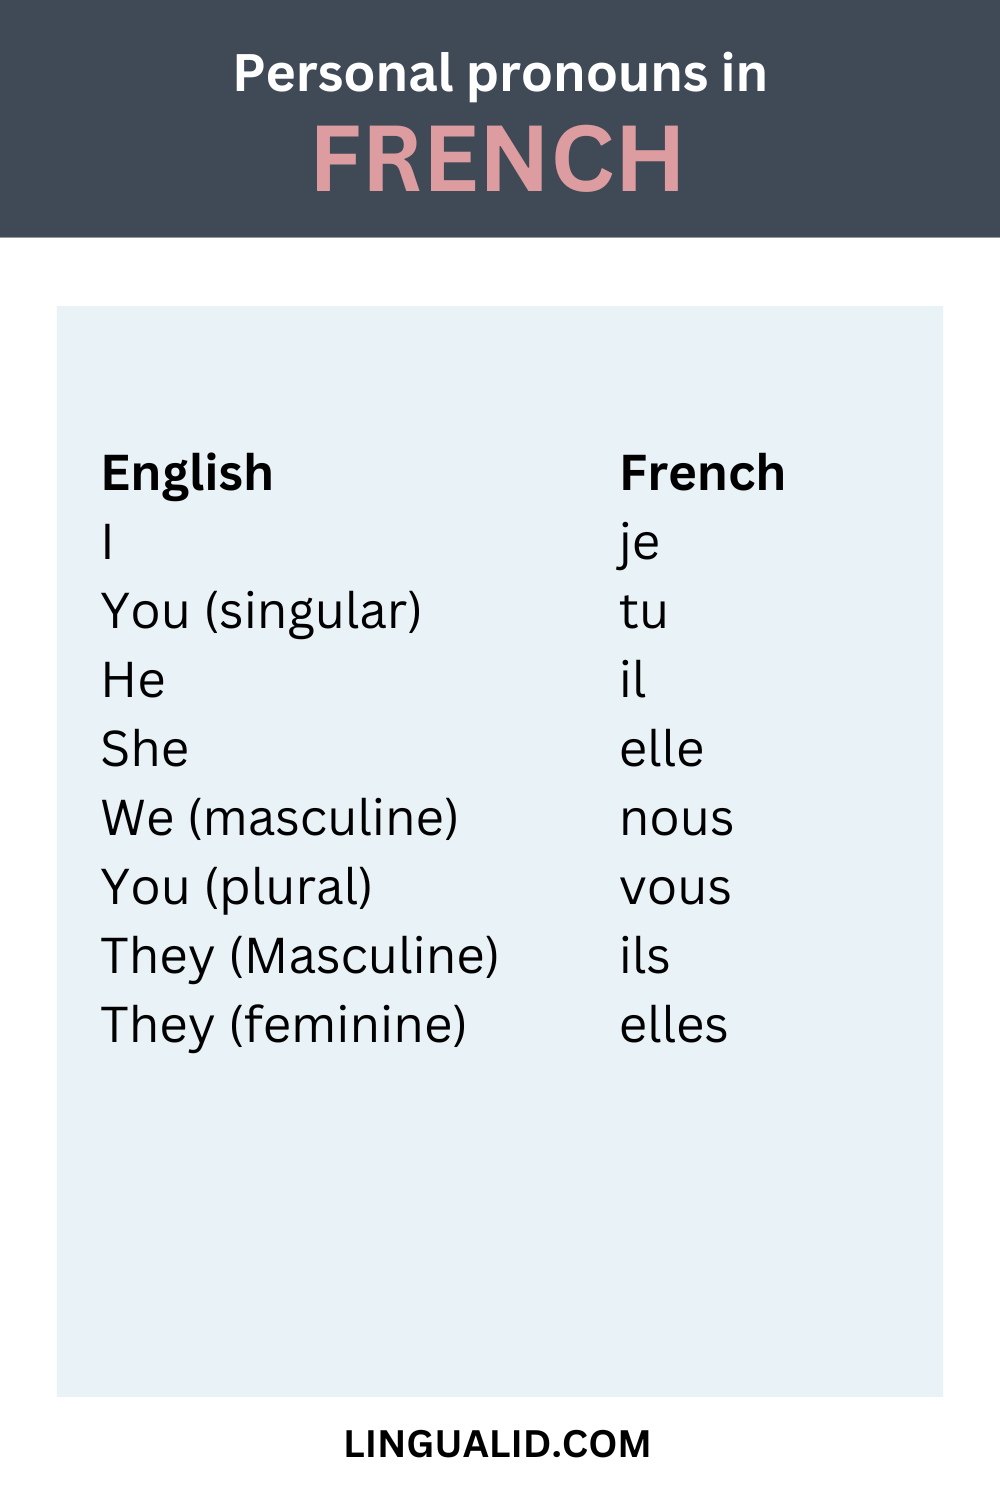 French Personal Pronouns visual1